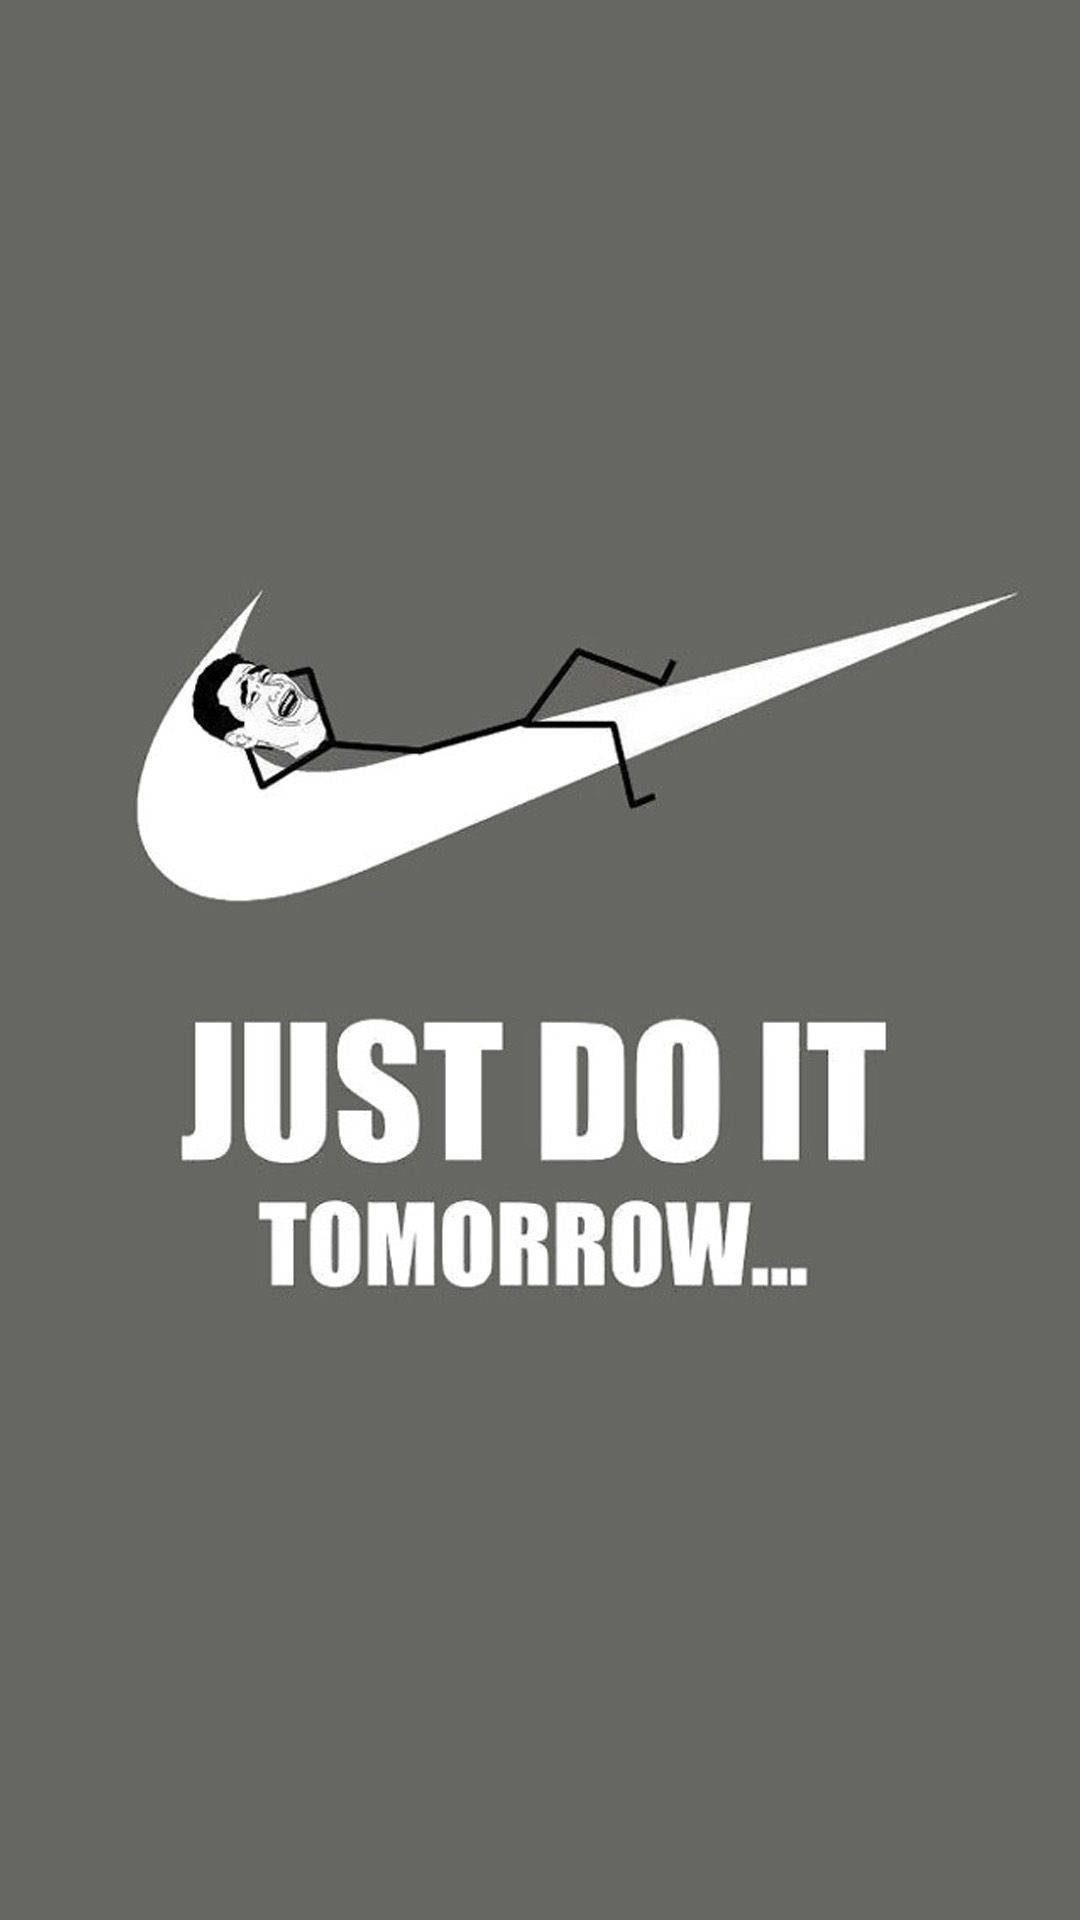 Just Do It Tomorrow - Nike T-shirt Wallpaper